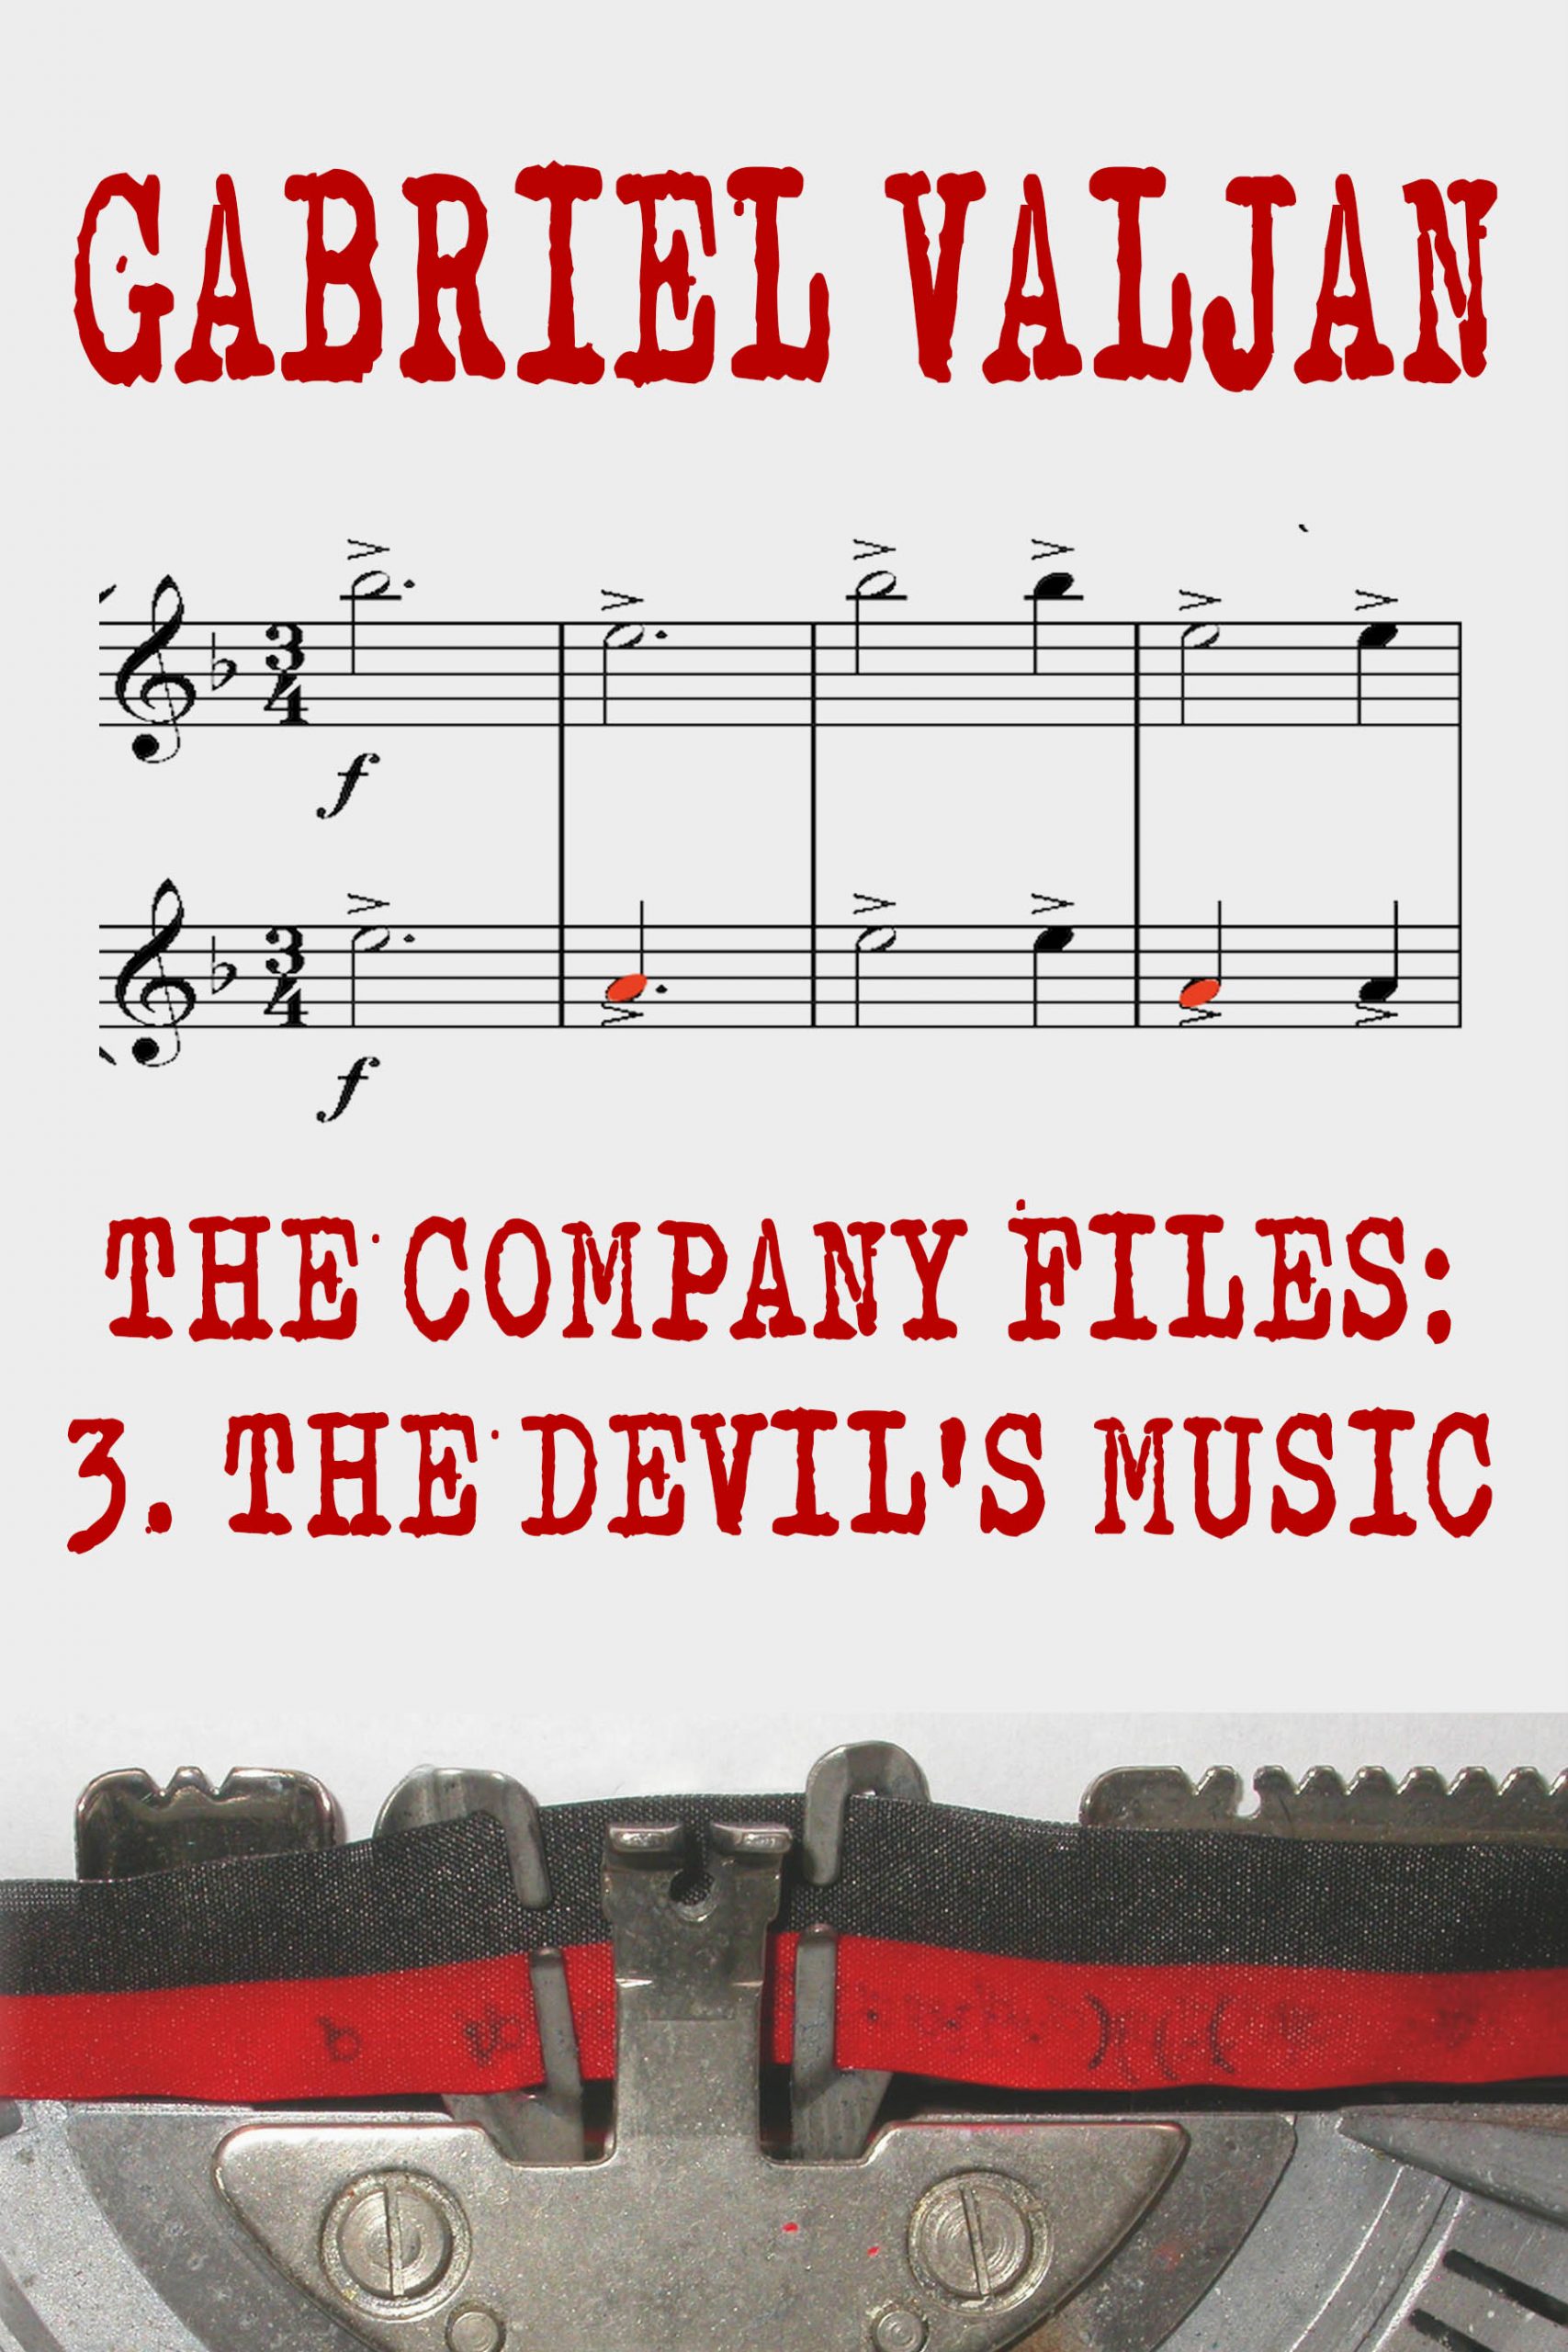 The Devil's Music by Gabriel Valjan